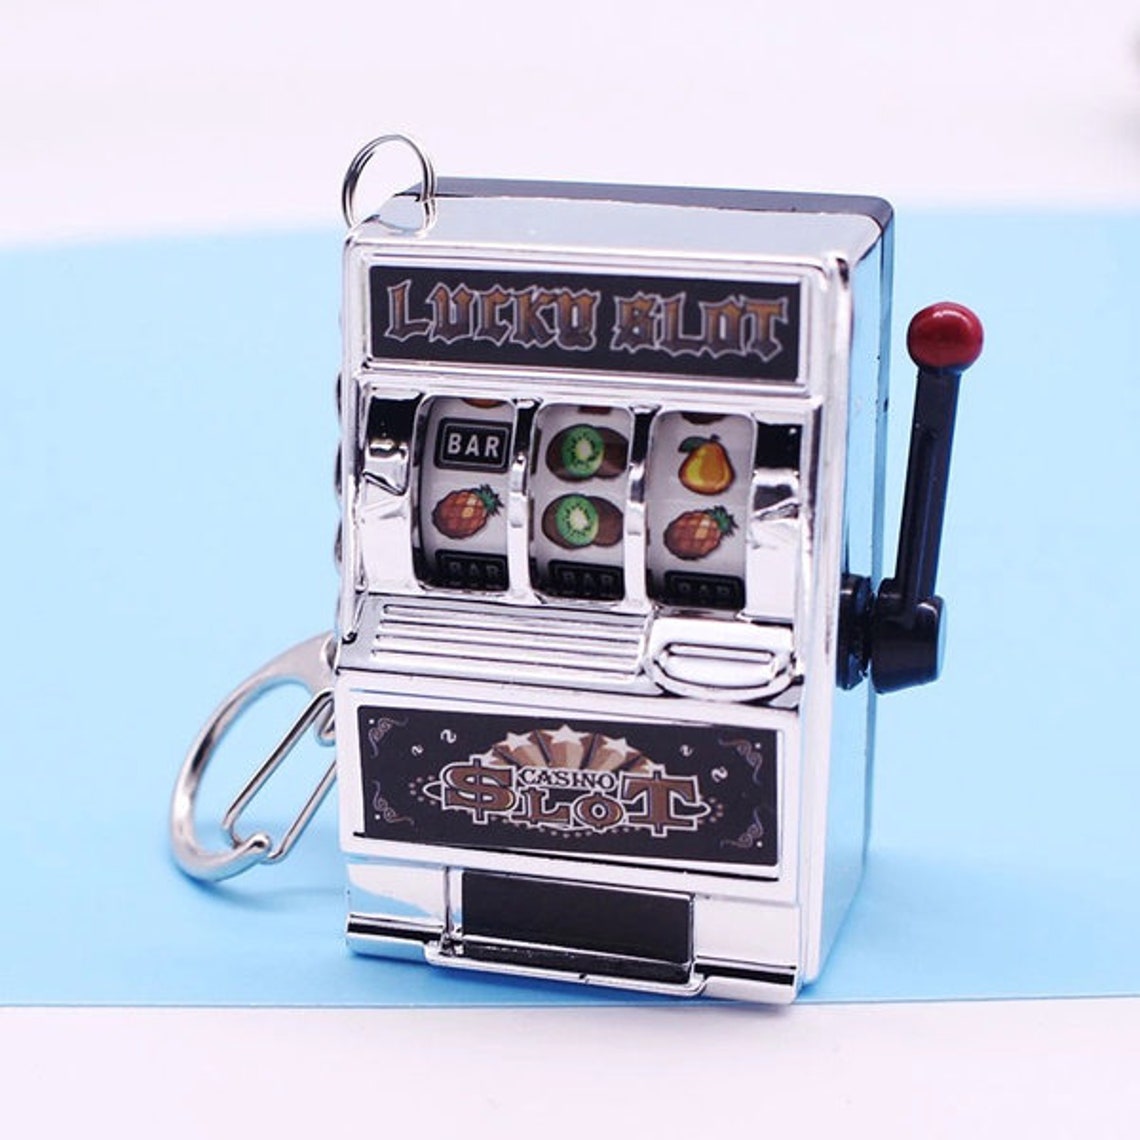 Mini hand-held slot machine toy | Etsy